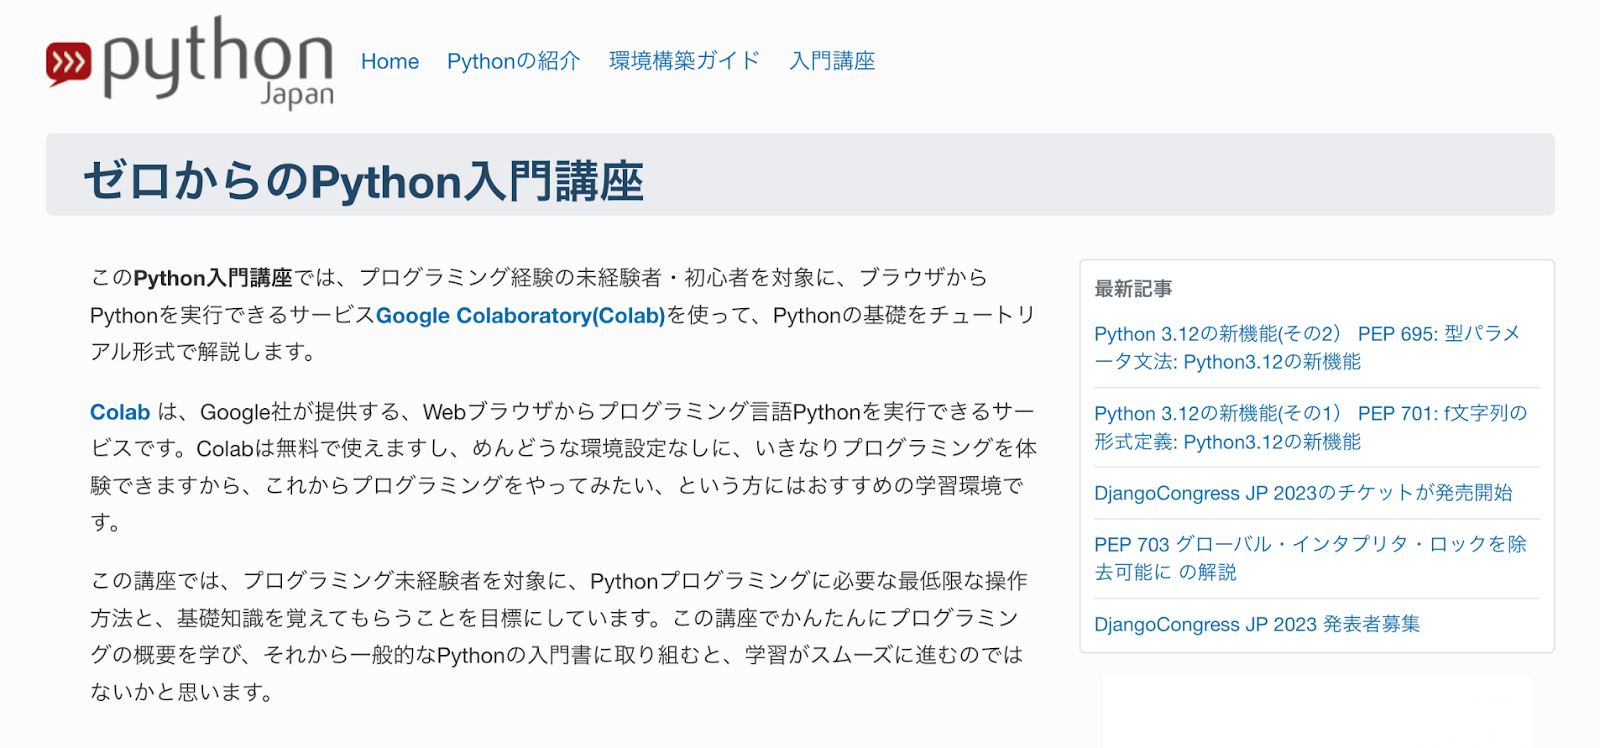 python Japan「ゼロからPython入門講座」